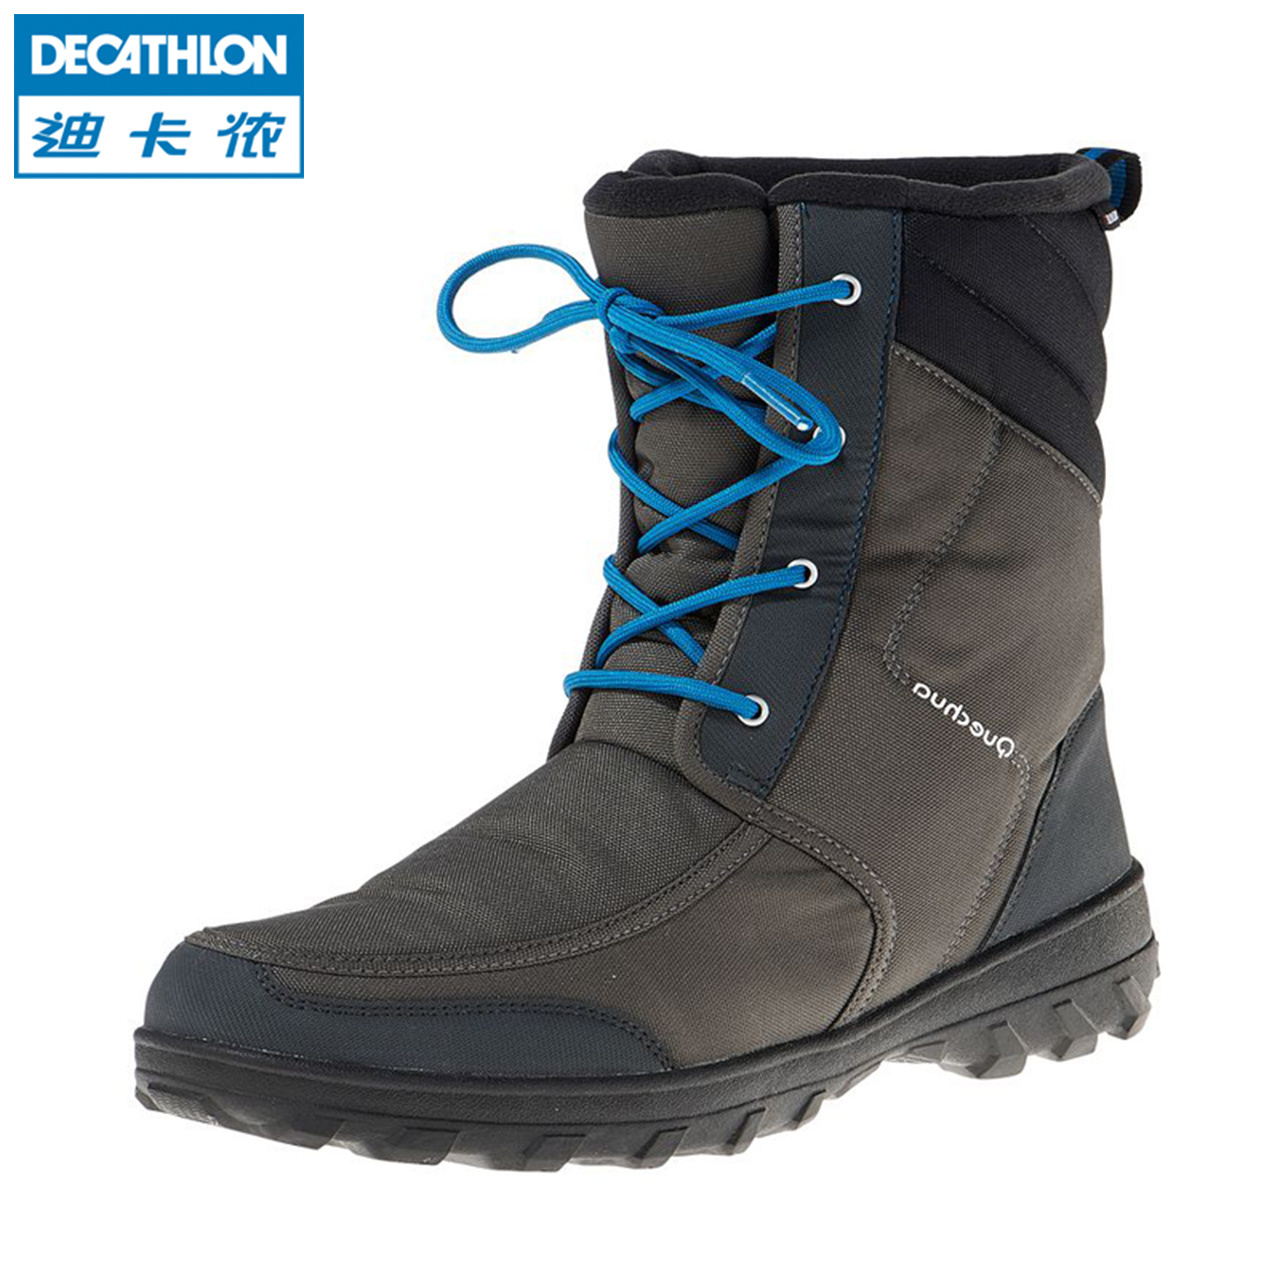 decathlon mens boots